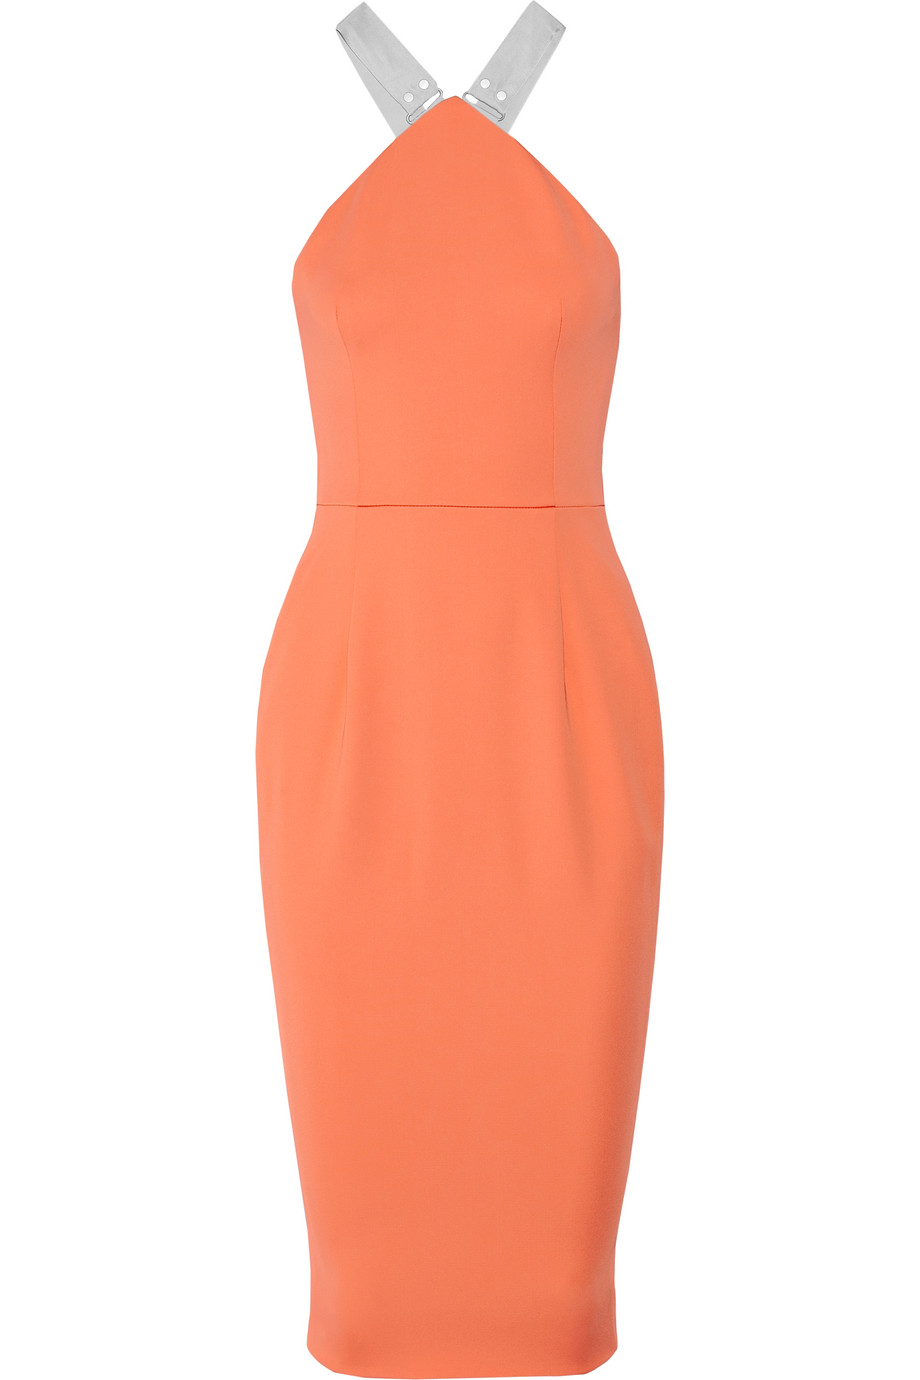 Victoria Beckham Stretchcrepe Dress in Orange (gray) | Lyst